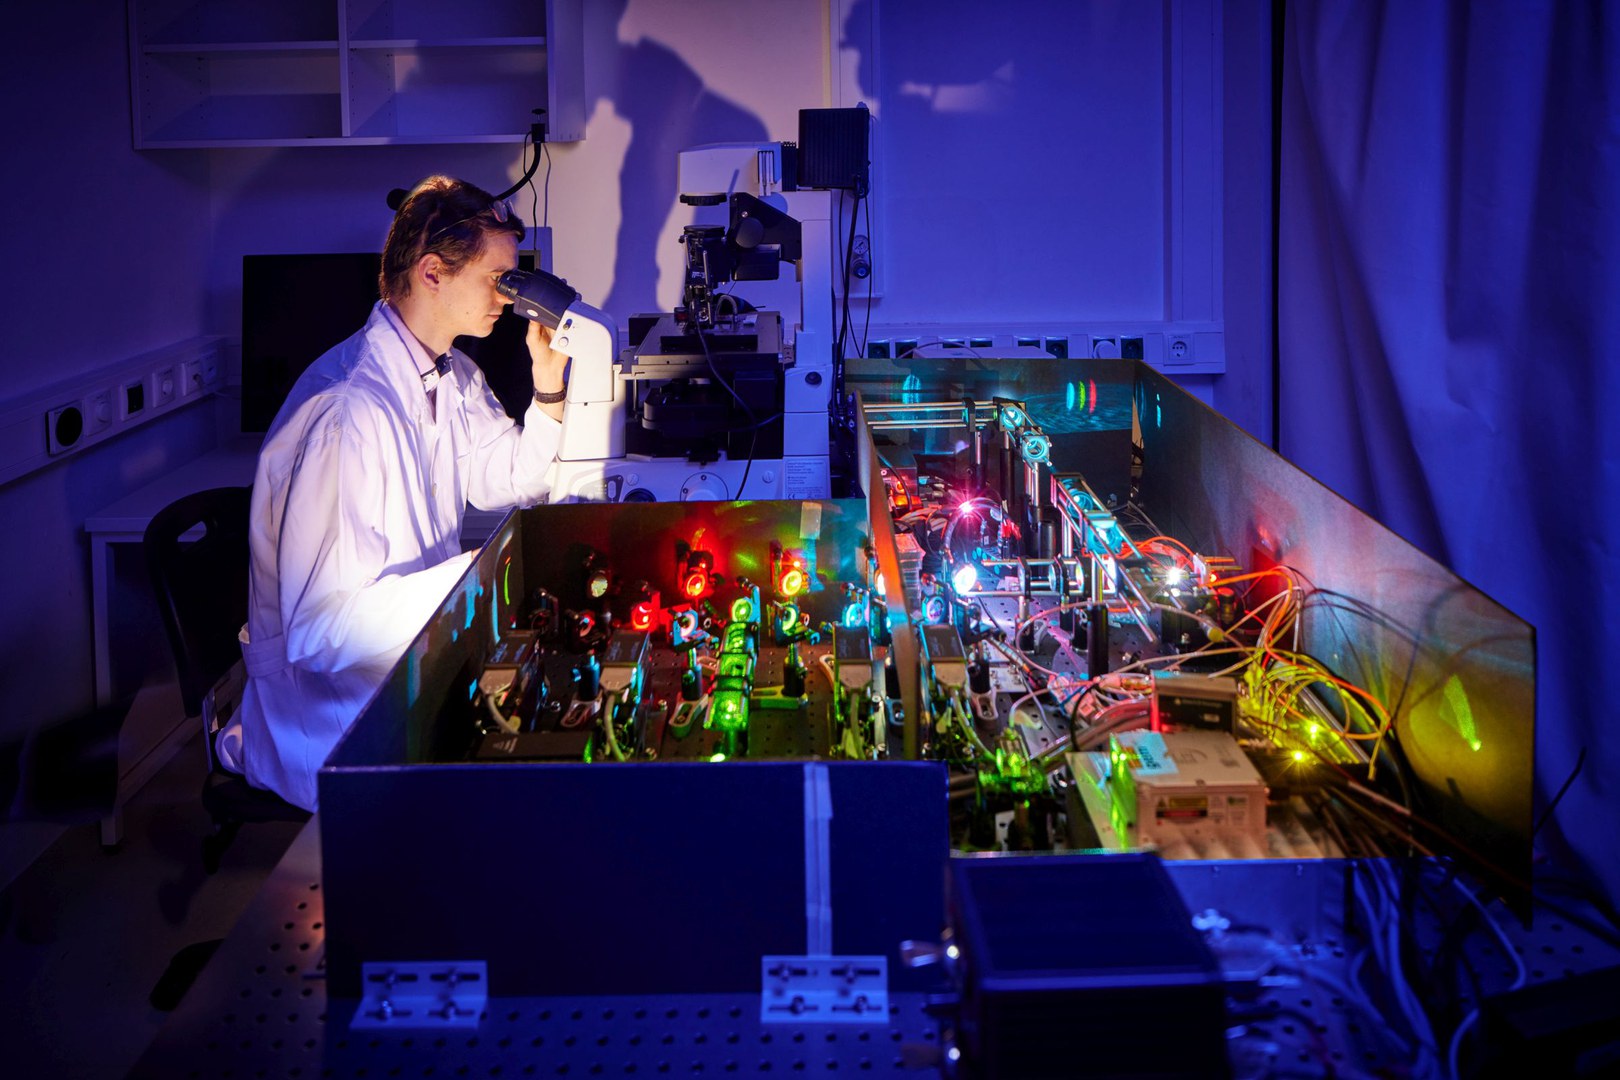 Dr. Koen Martens working at a custom-built super-resolution fluorescence microscope